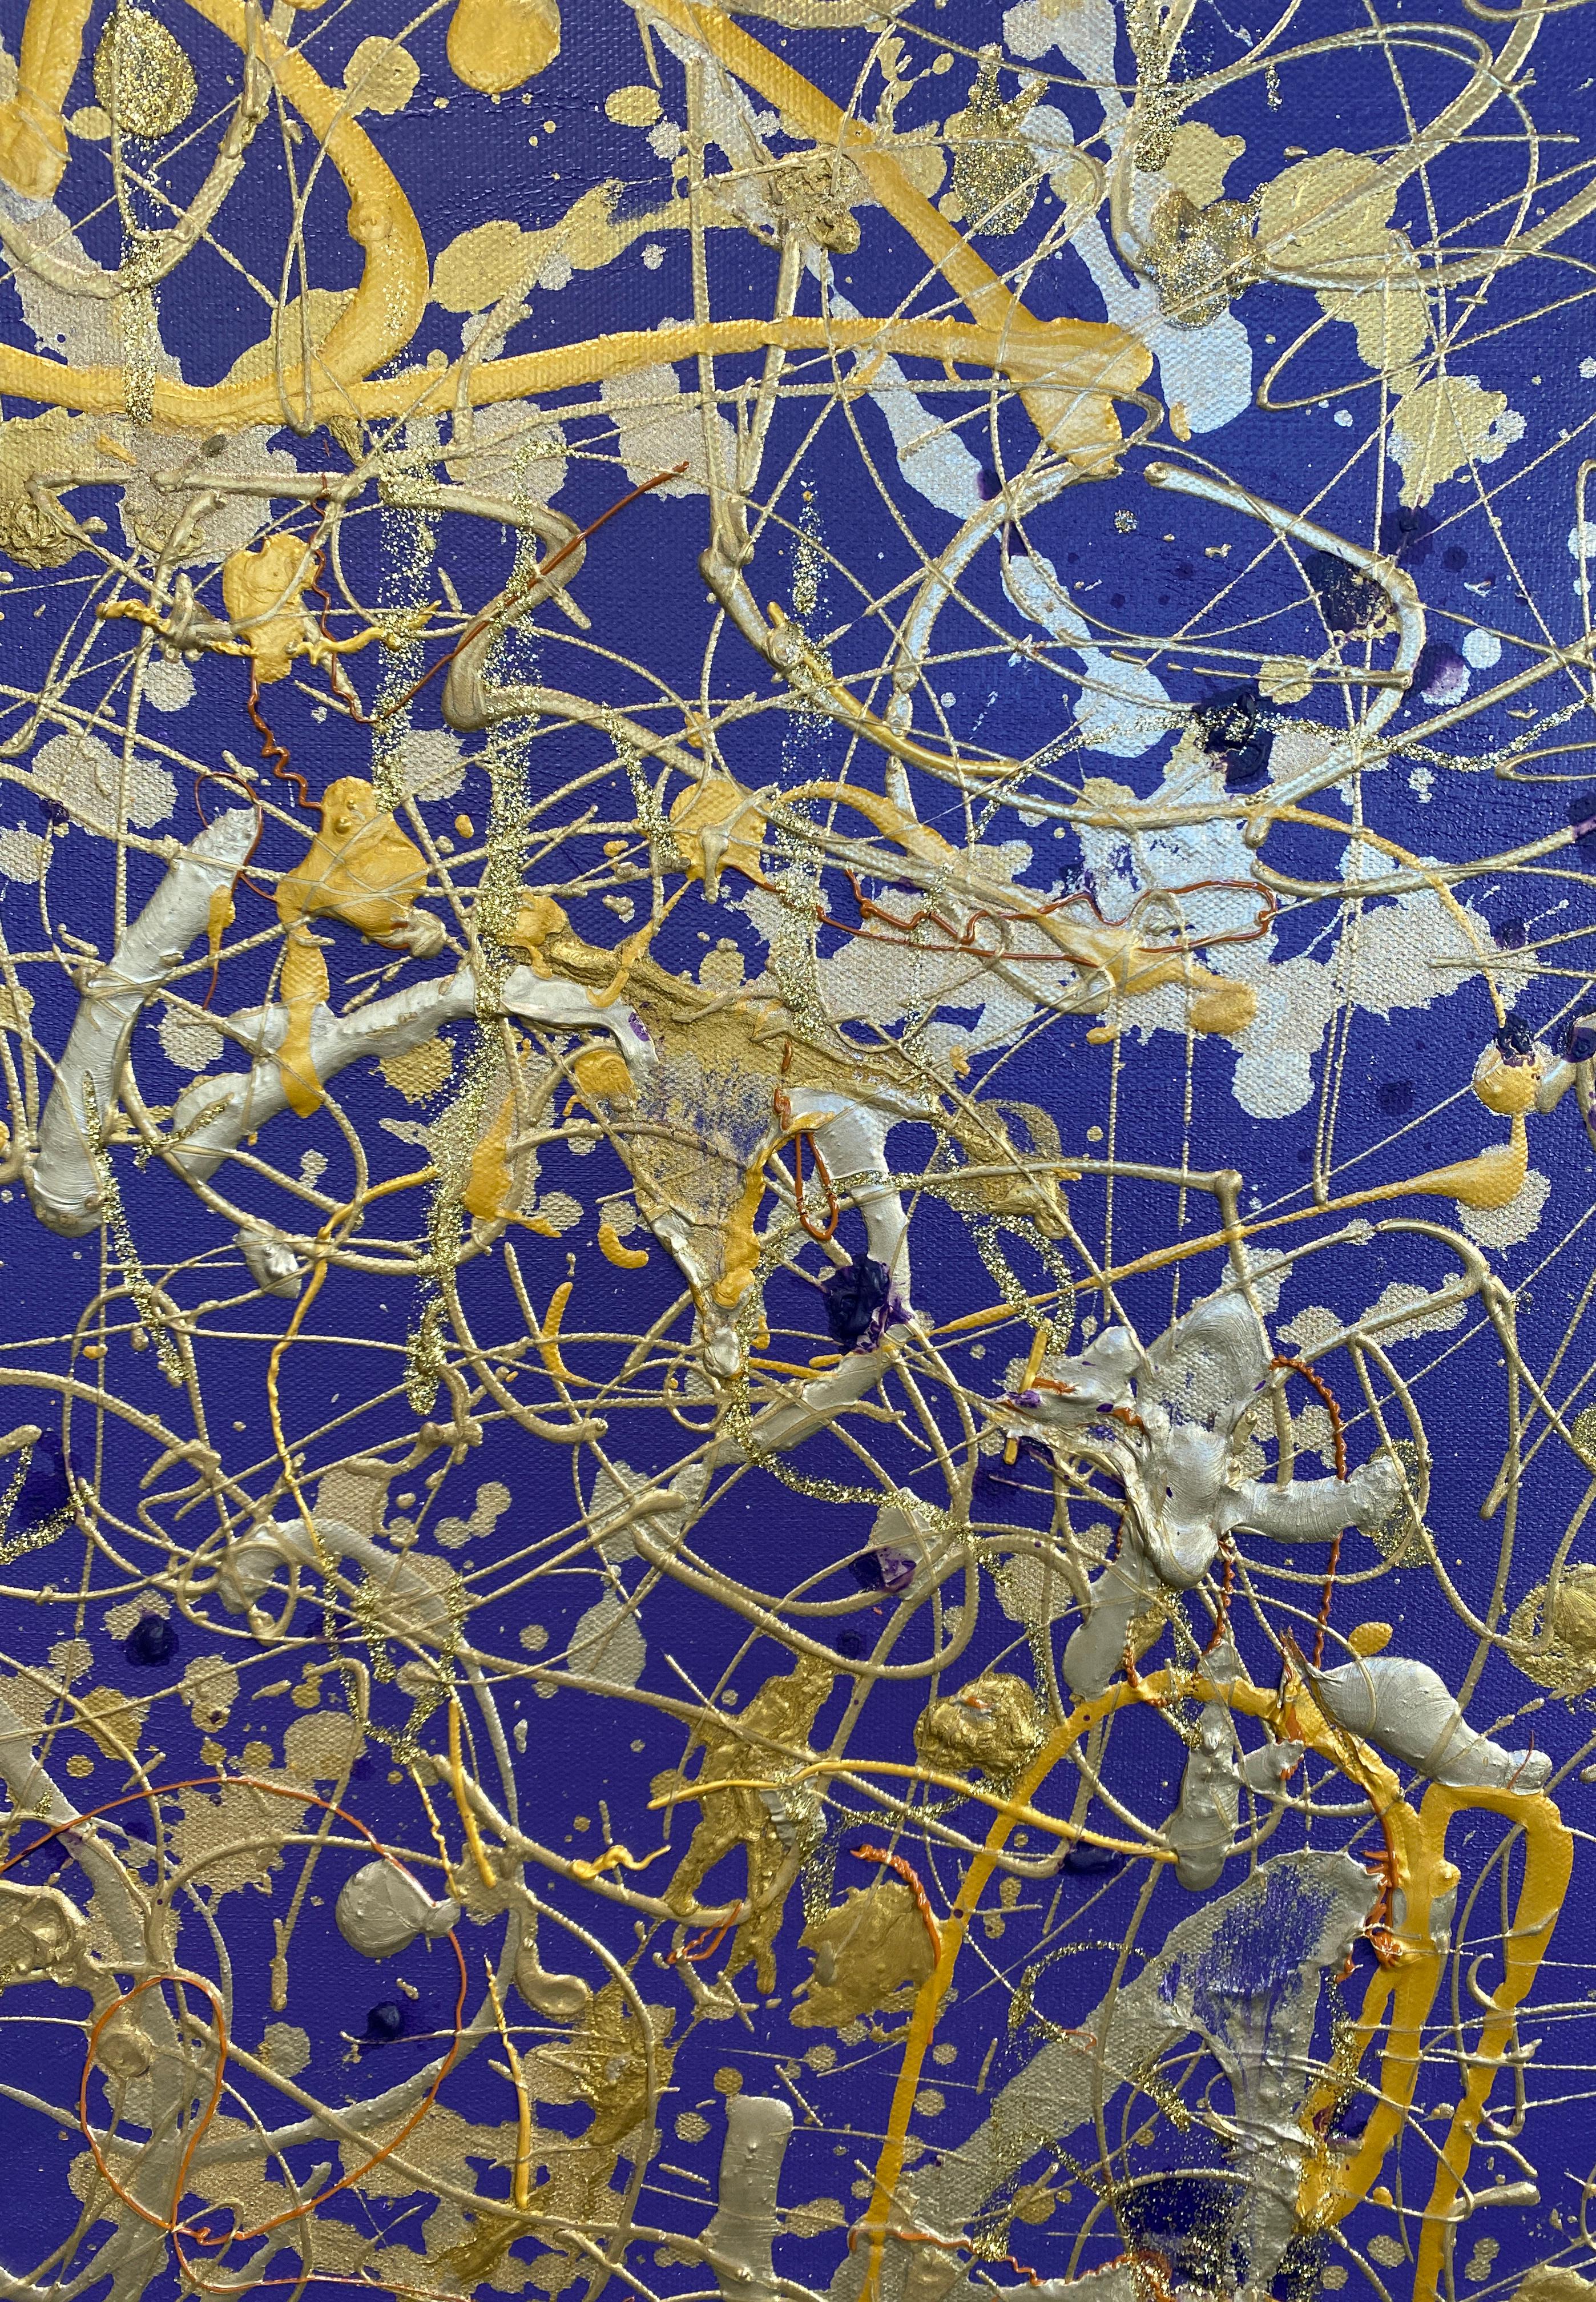 Purple Jewel Jackson Pollock Inspired Abstract Painting on Canvas 36x48